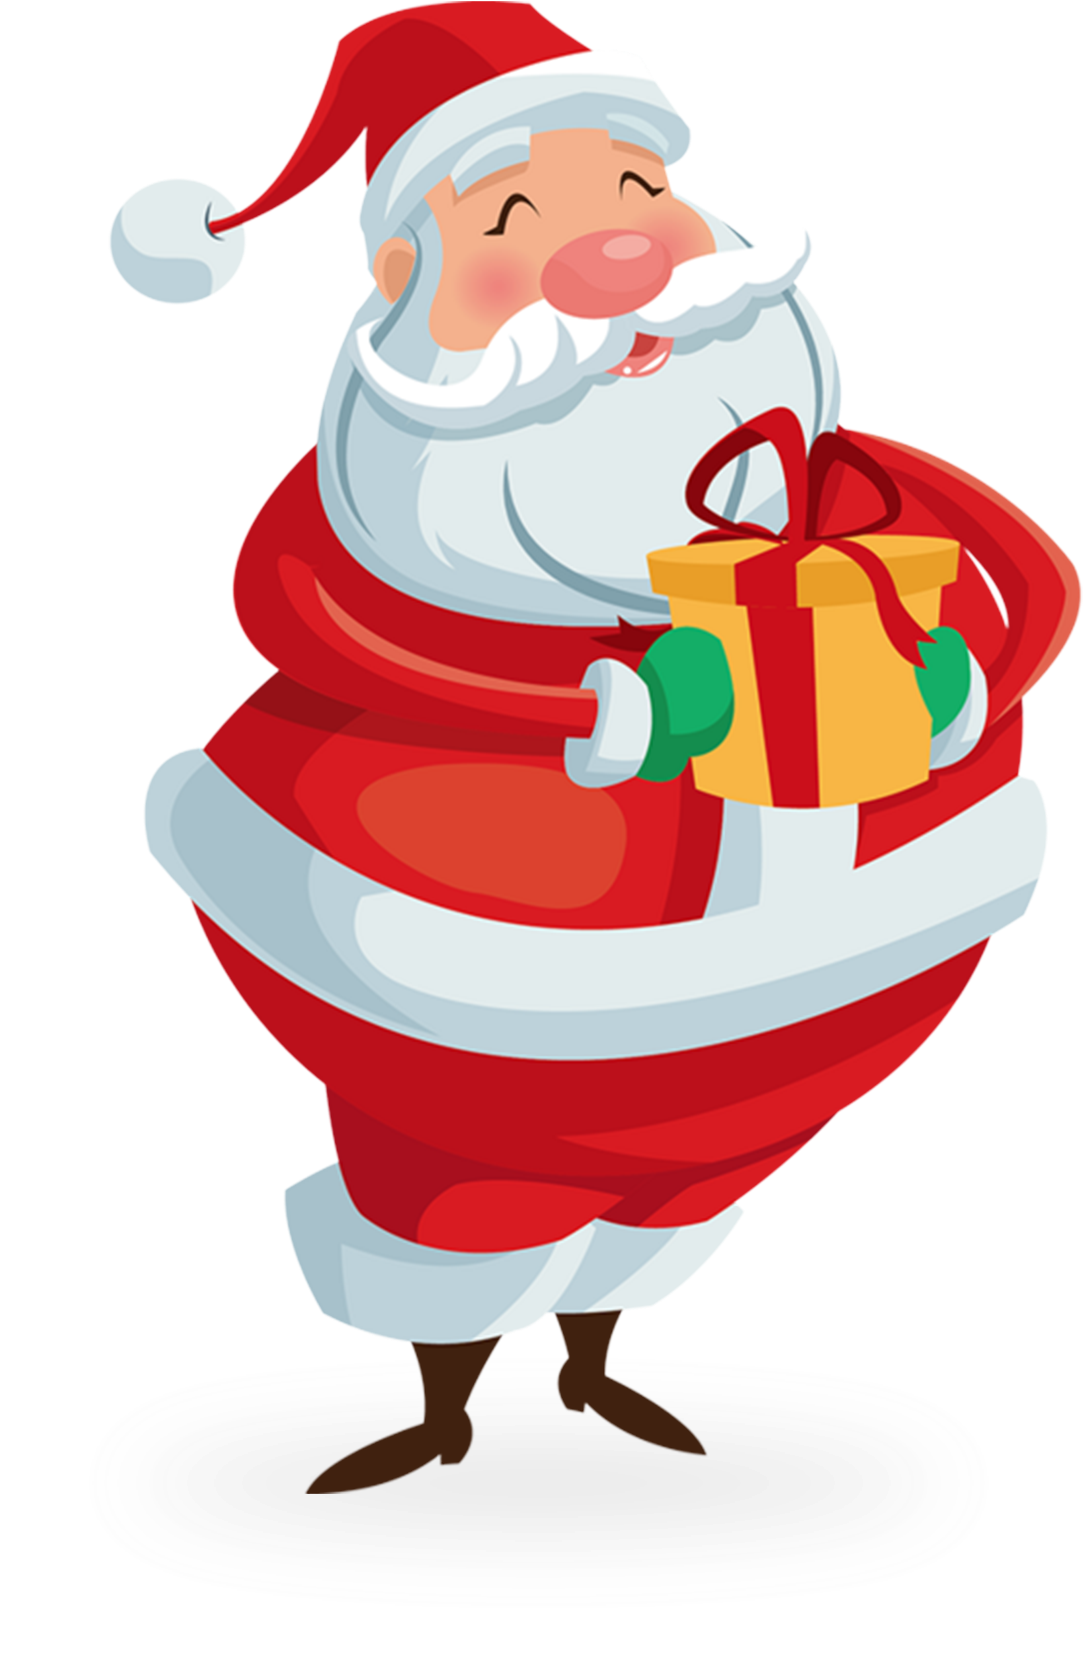 A Cartoon Of A Santa Claus Holding A Gift